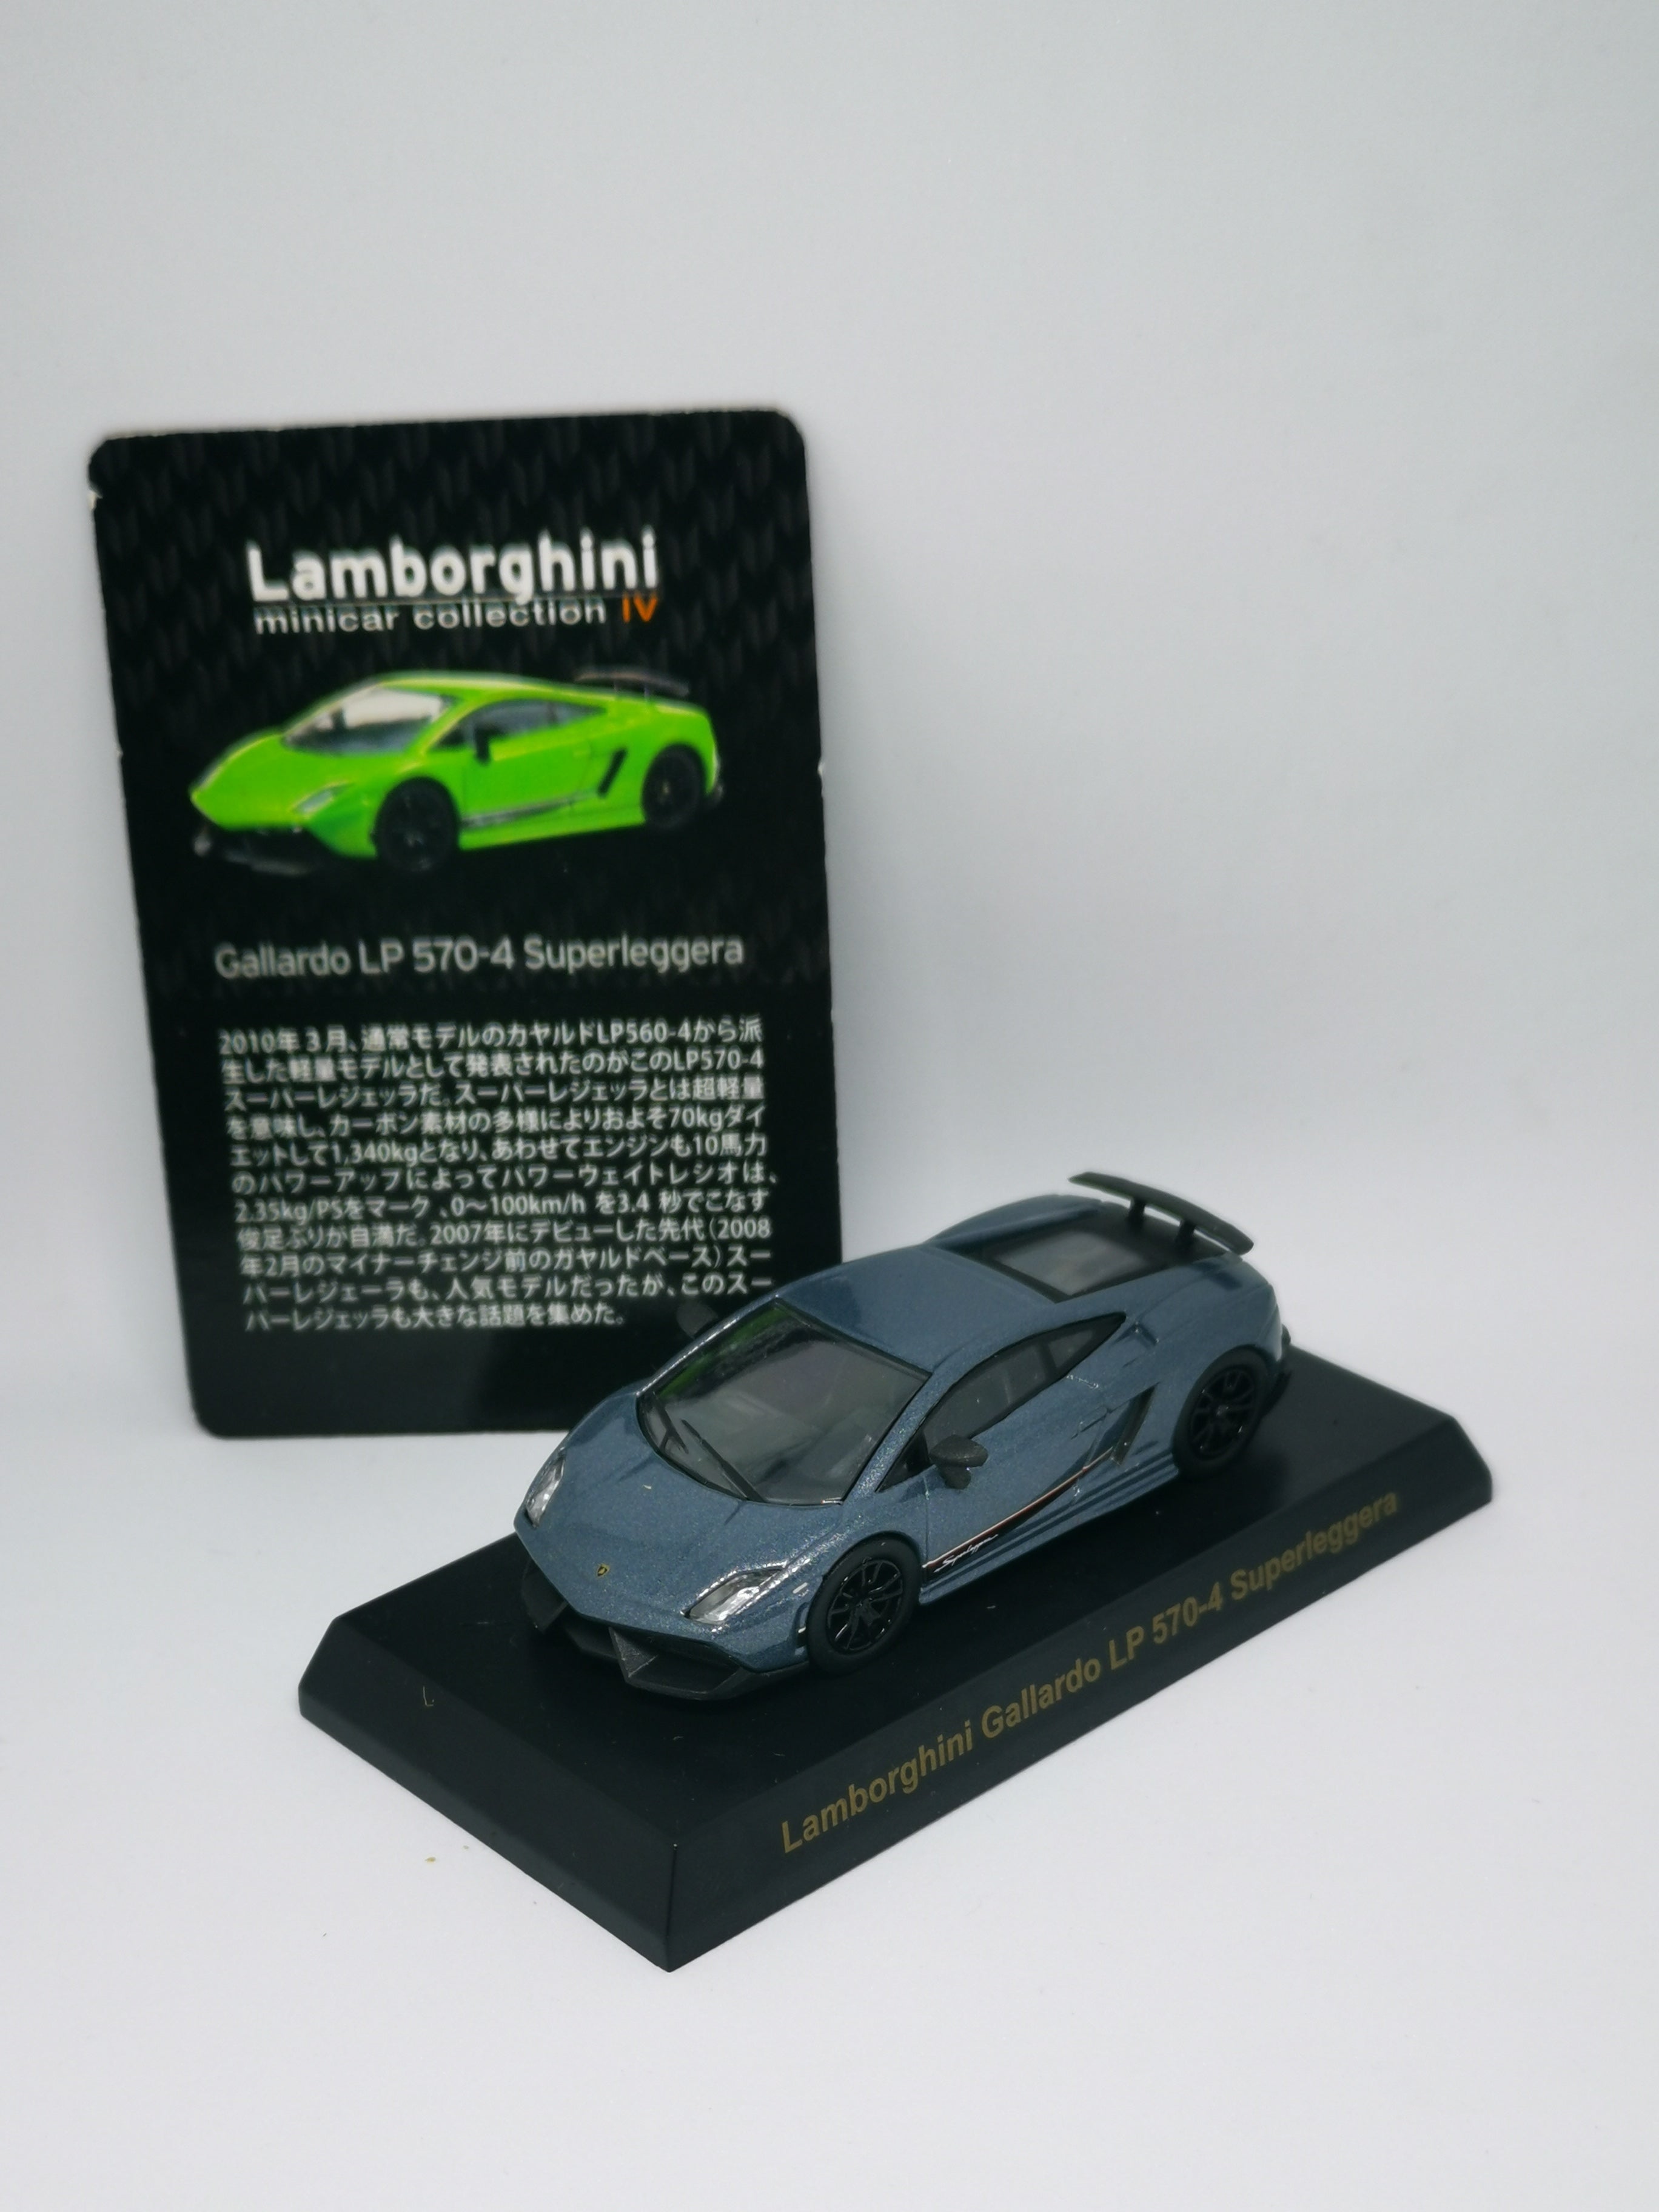 Kyosho 1:64 Scale Minicar Collection Lamborghini IV Lamborghini